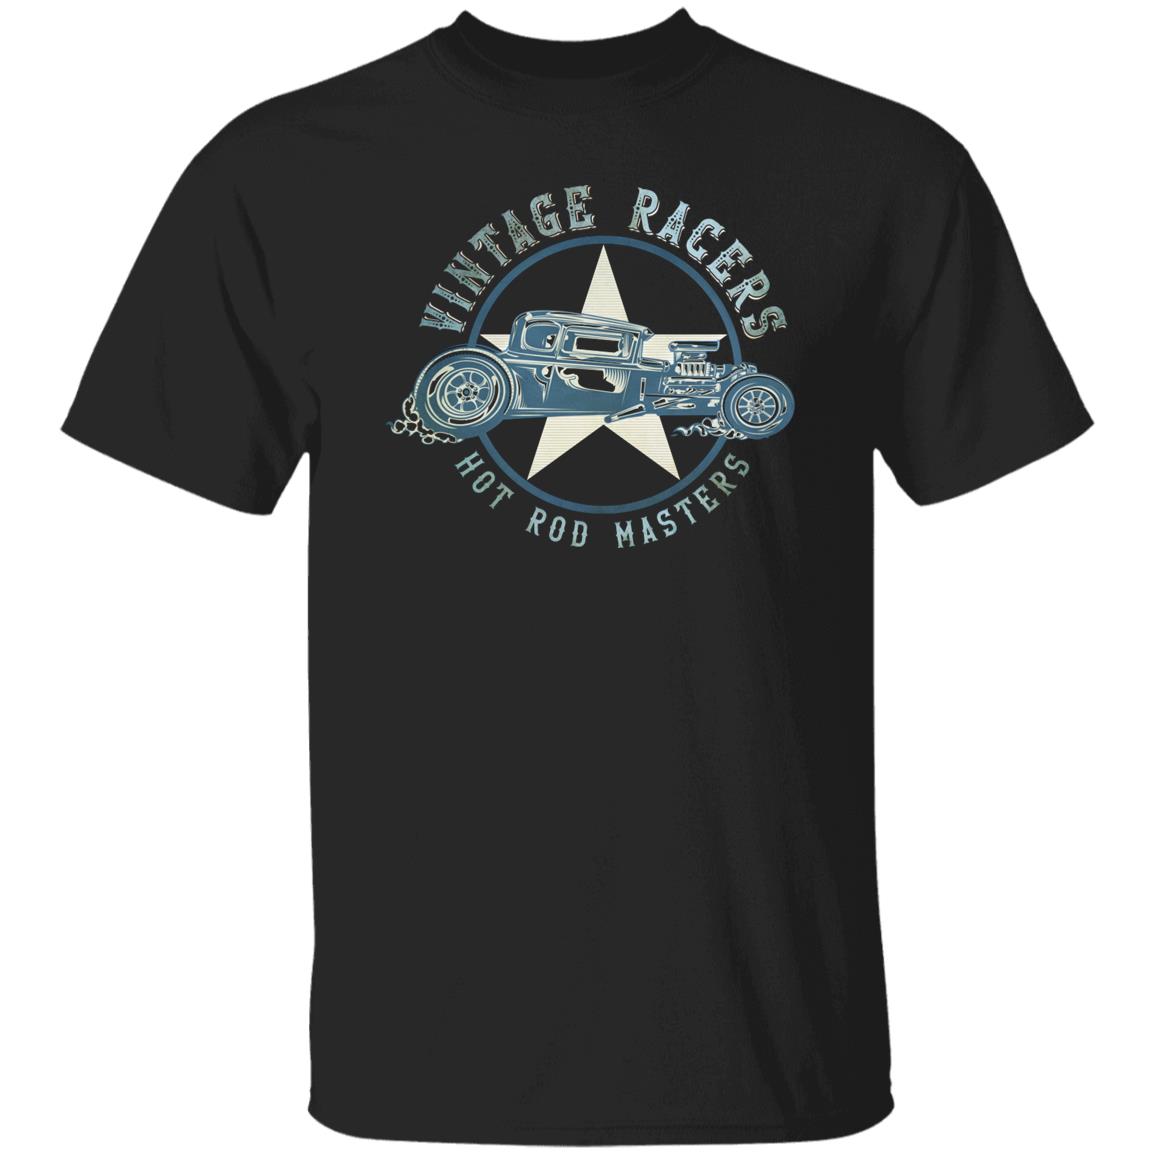 Vintage Racers T-Shirt